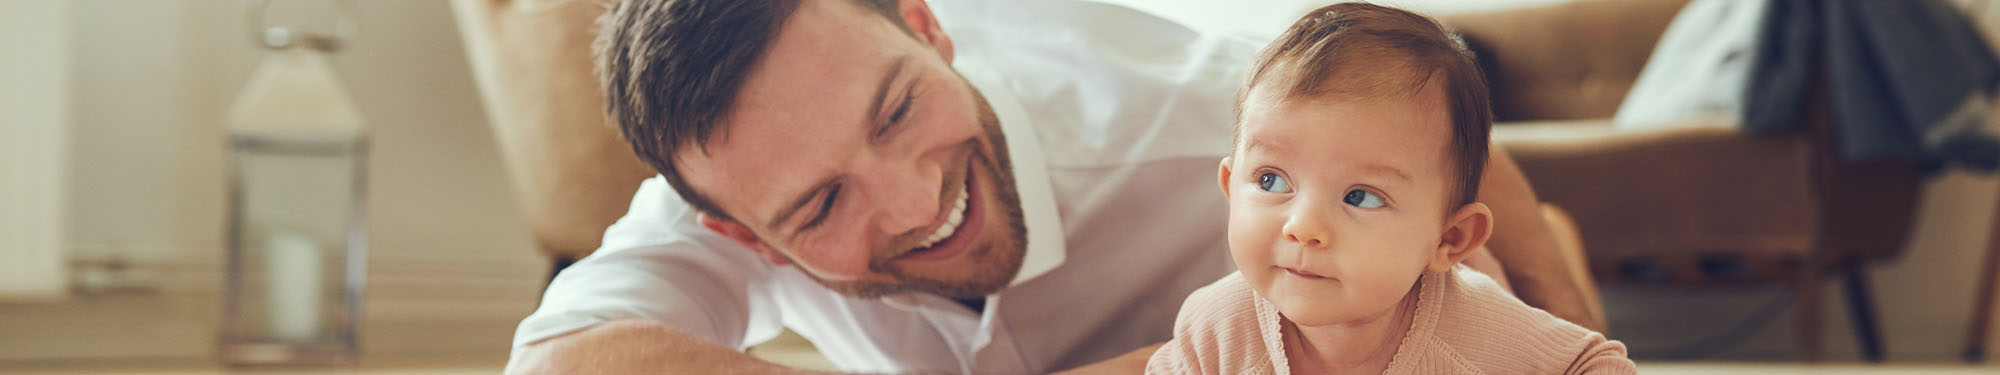 man smiling at a baby